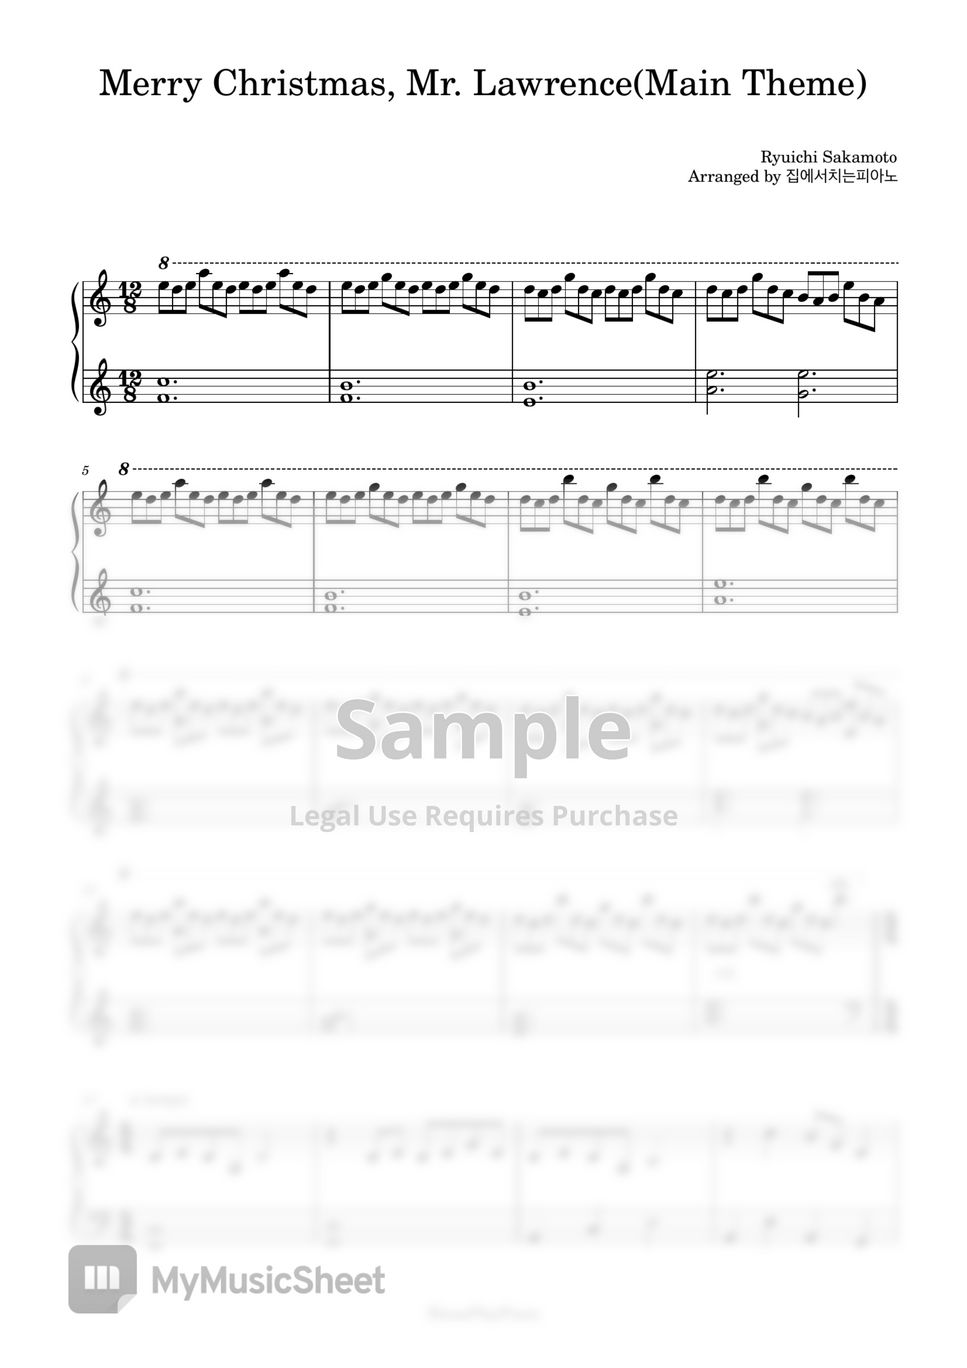 Ryuichi Sakamoto - Merry Christmas, Mr. Lawrence (Ckey Easy Piano Ver.) by HousePlayPiano